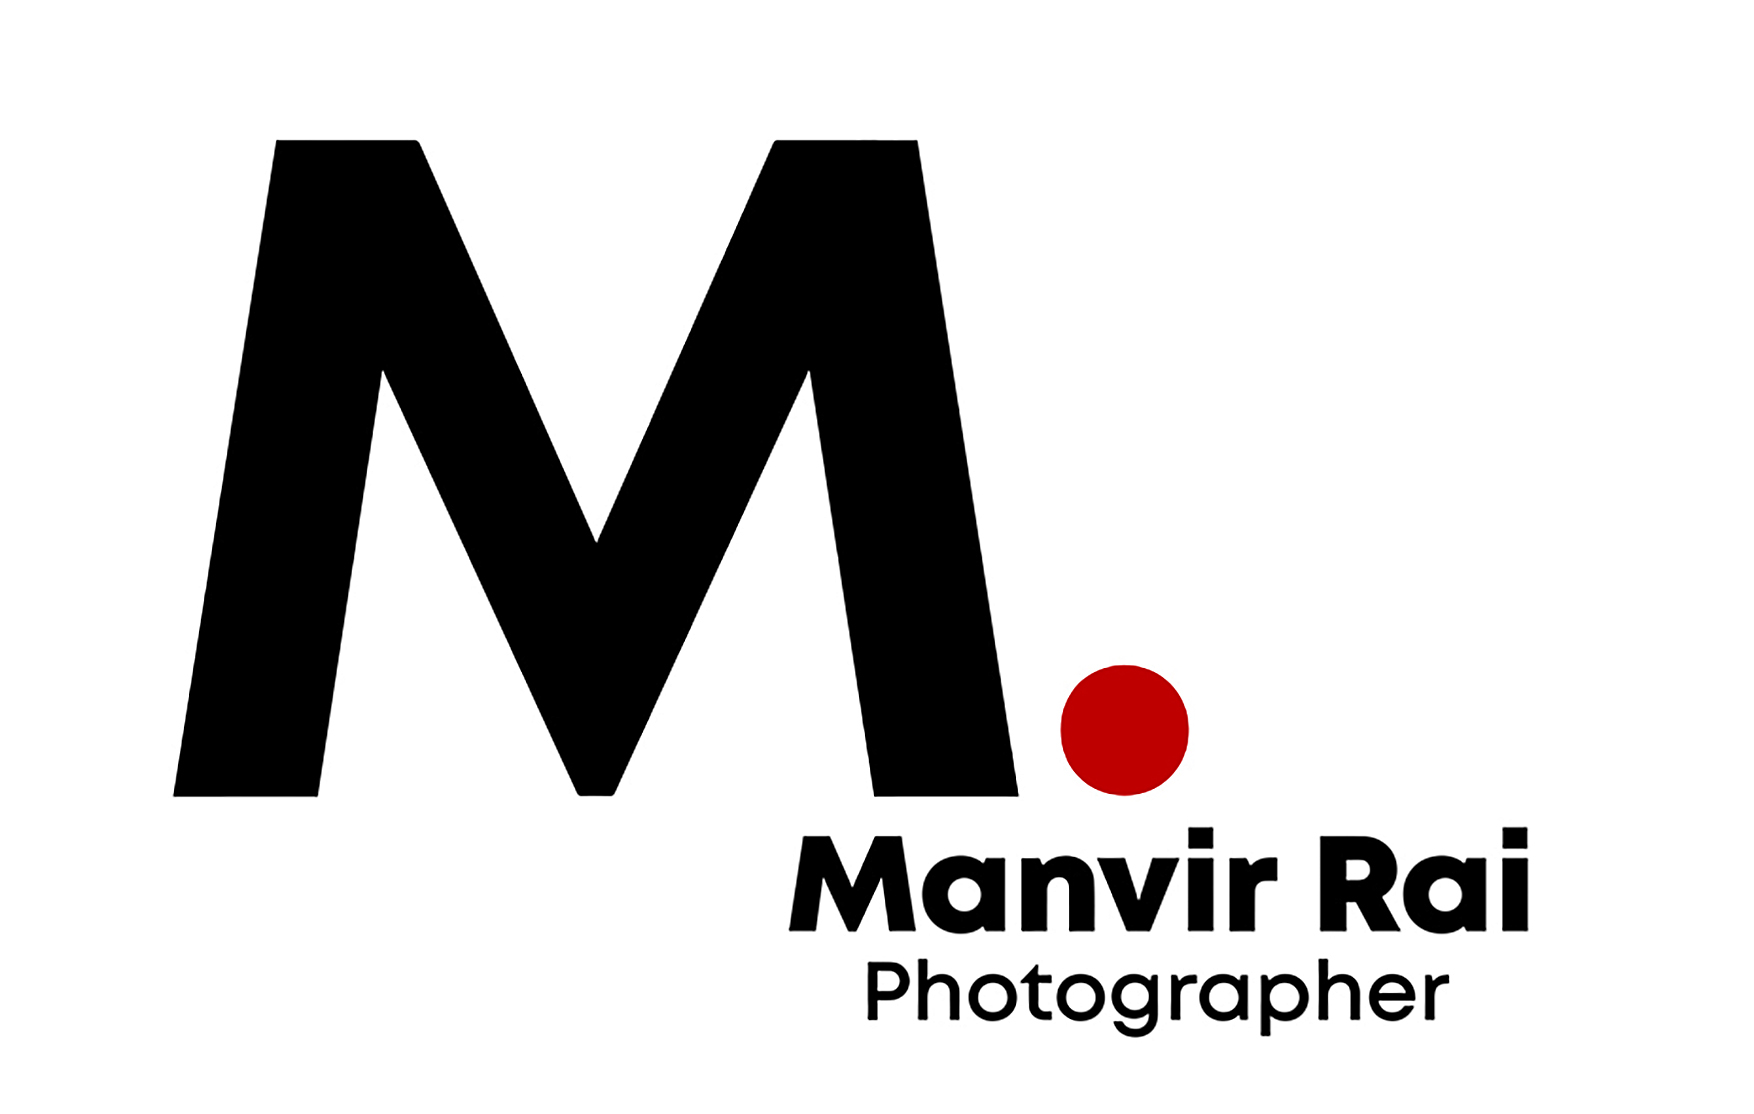 Manvir Rai Photographer